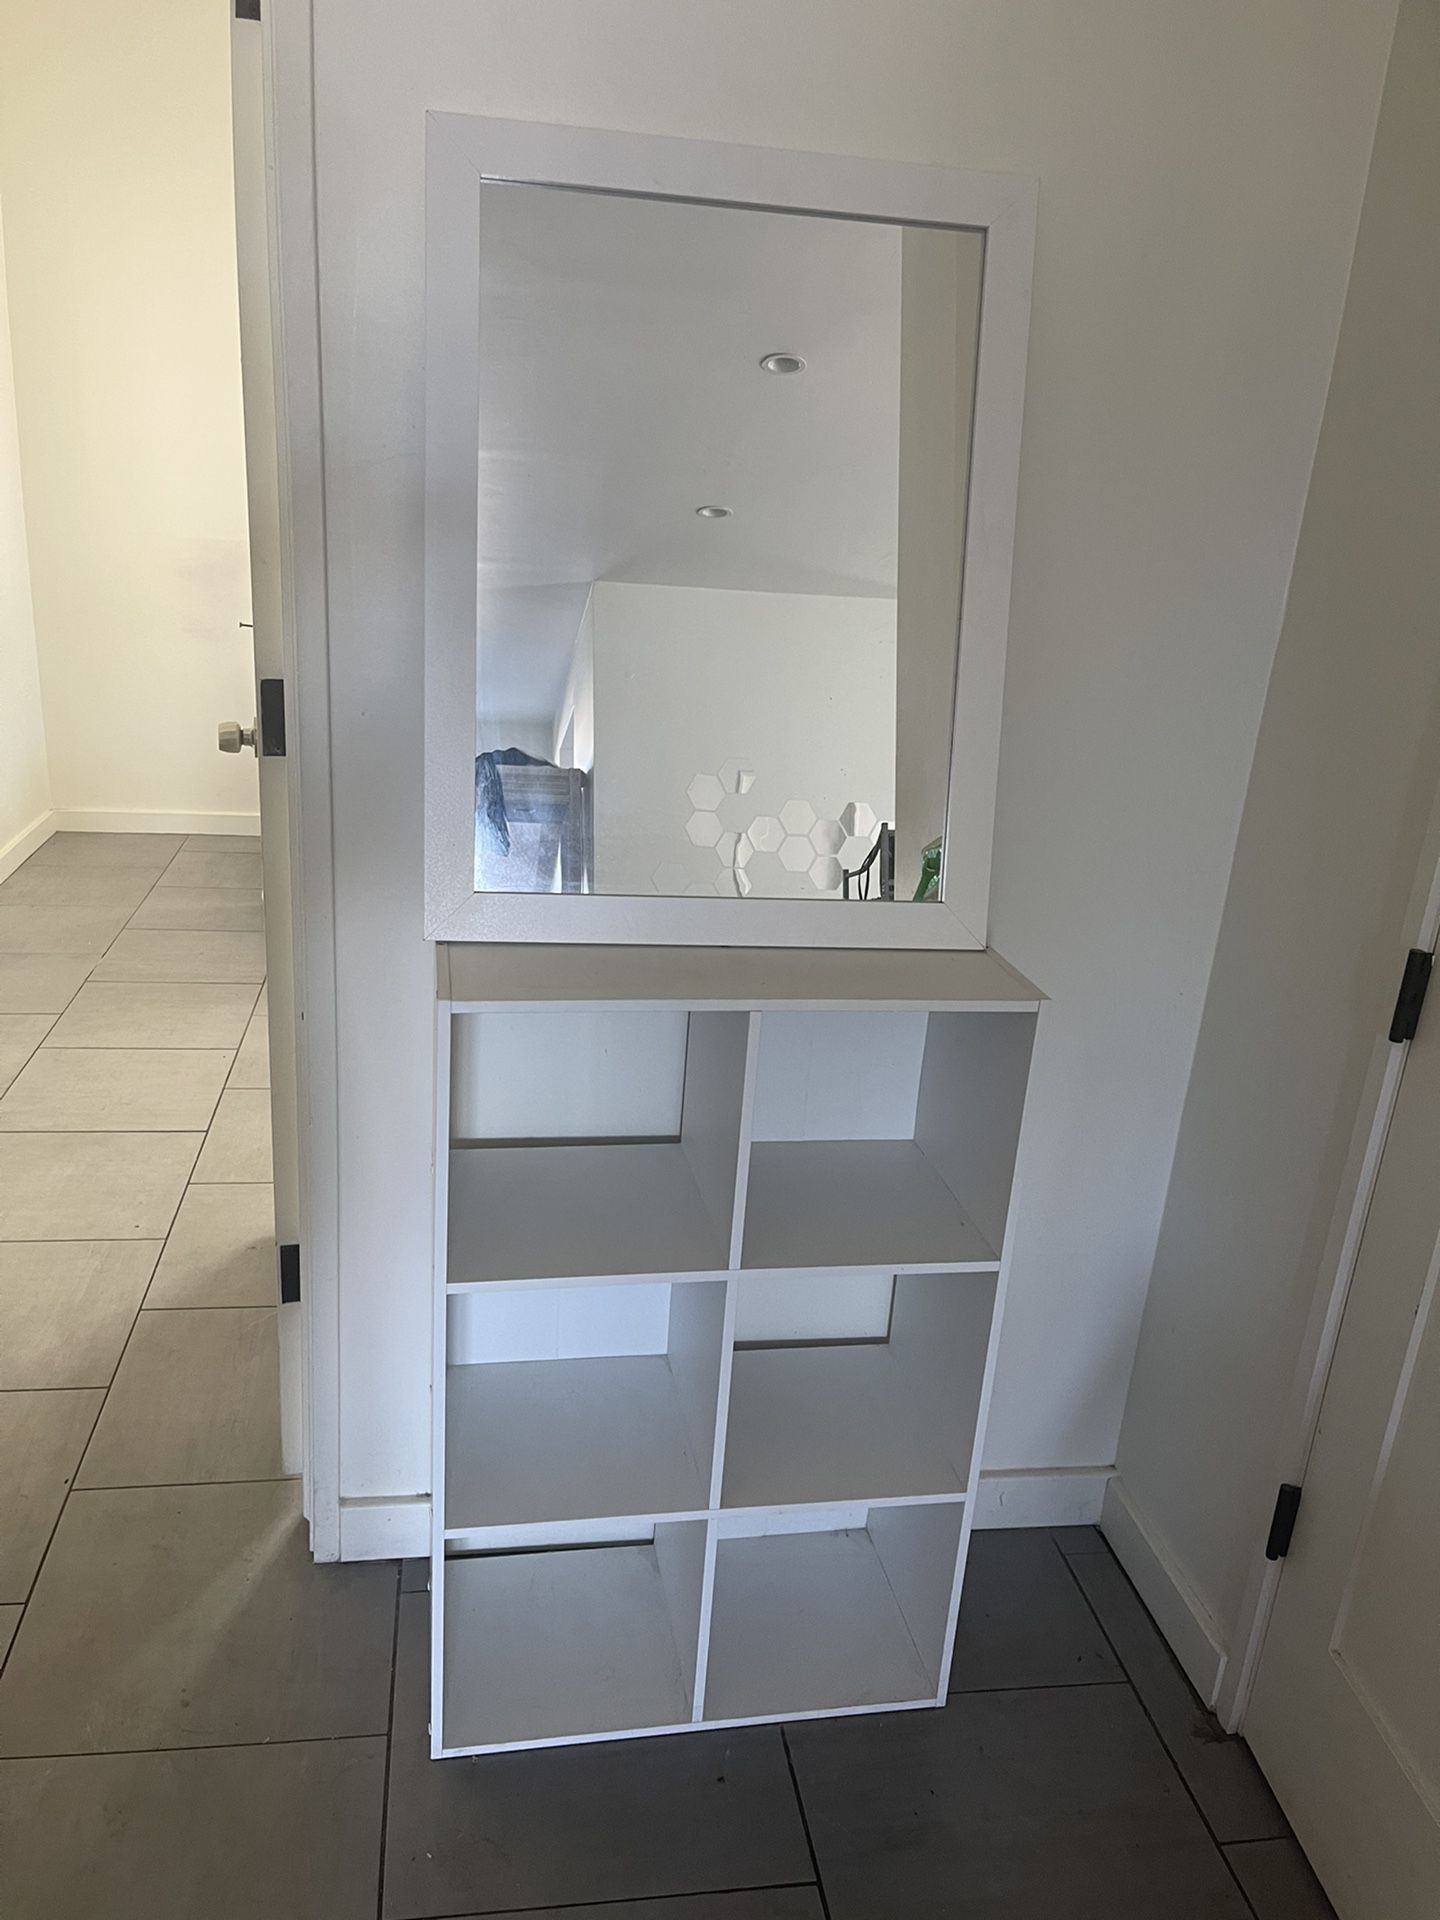 Storage cubby shelf and mirror